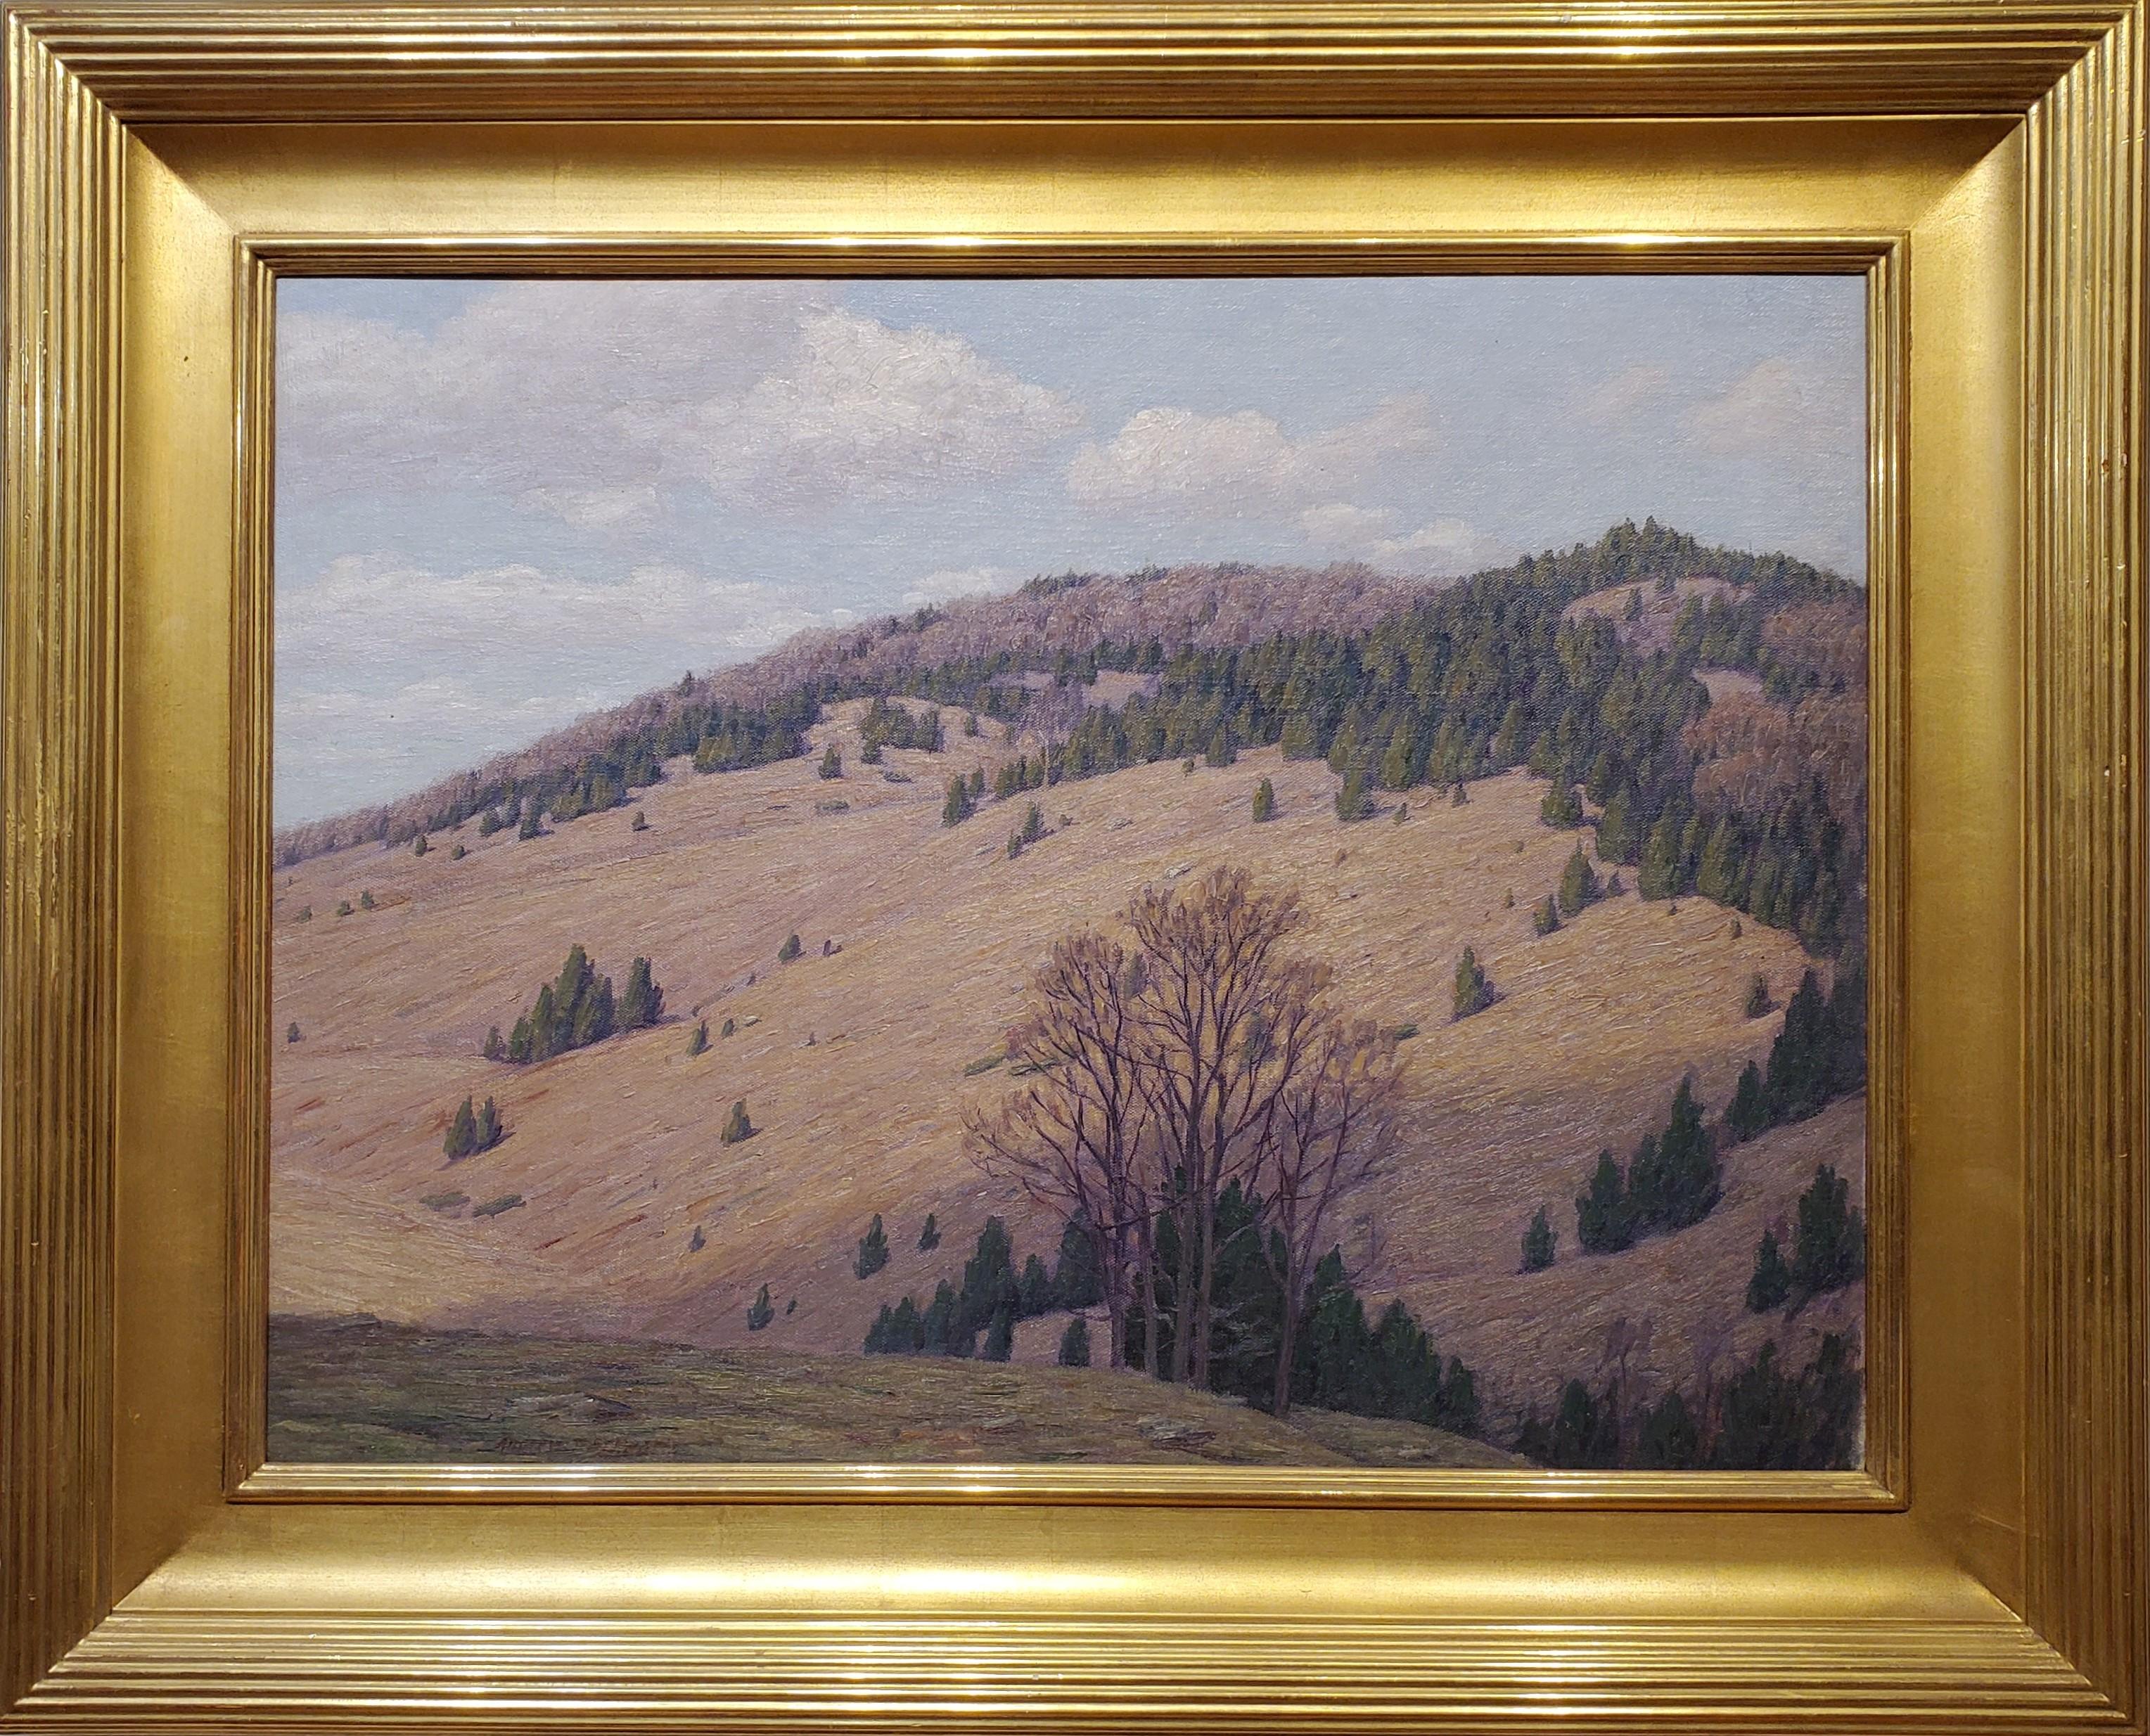 Mountain Landscape signed by Andrew T. Schwartz